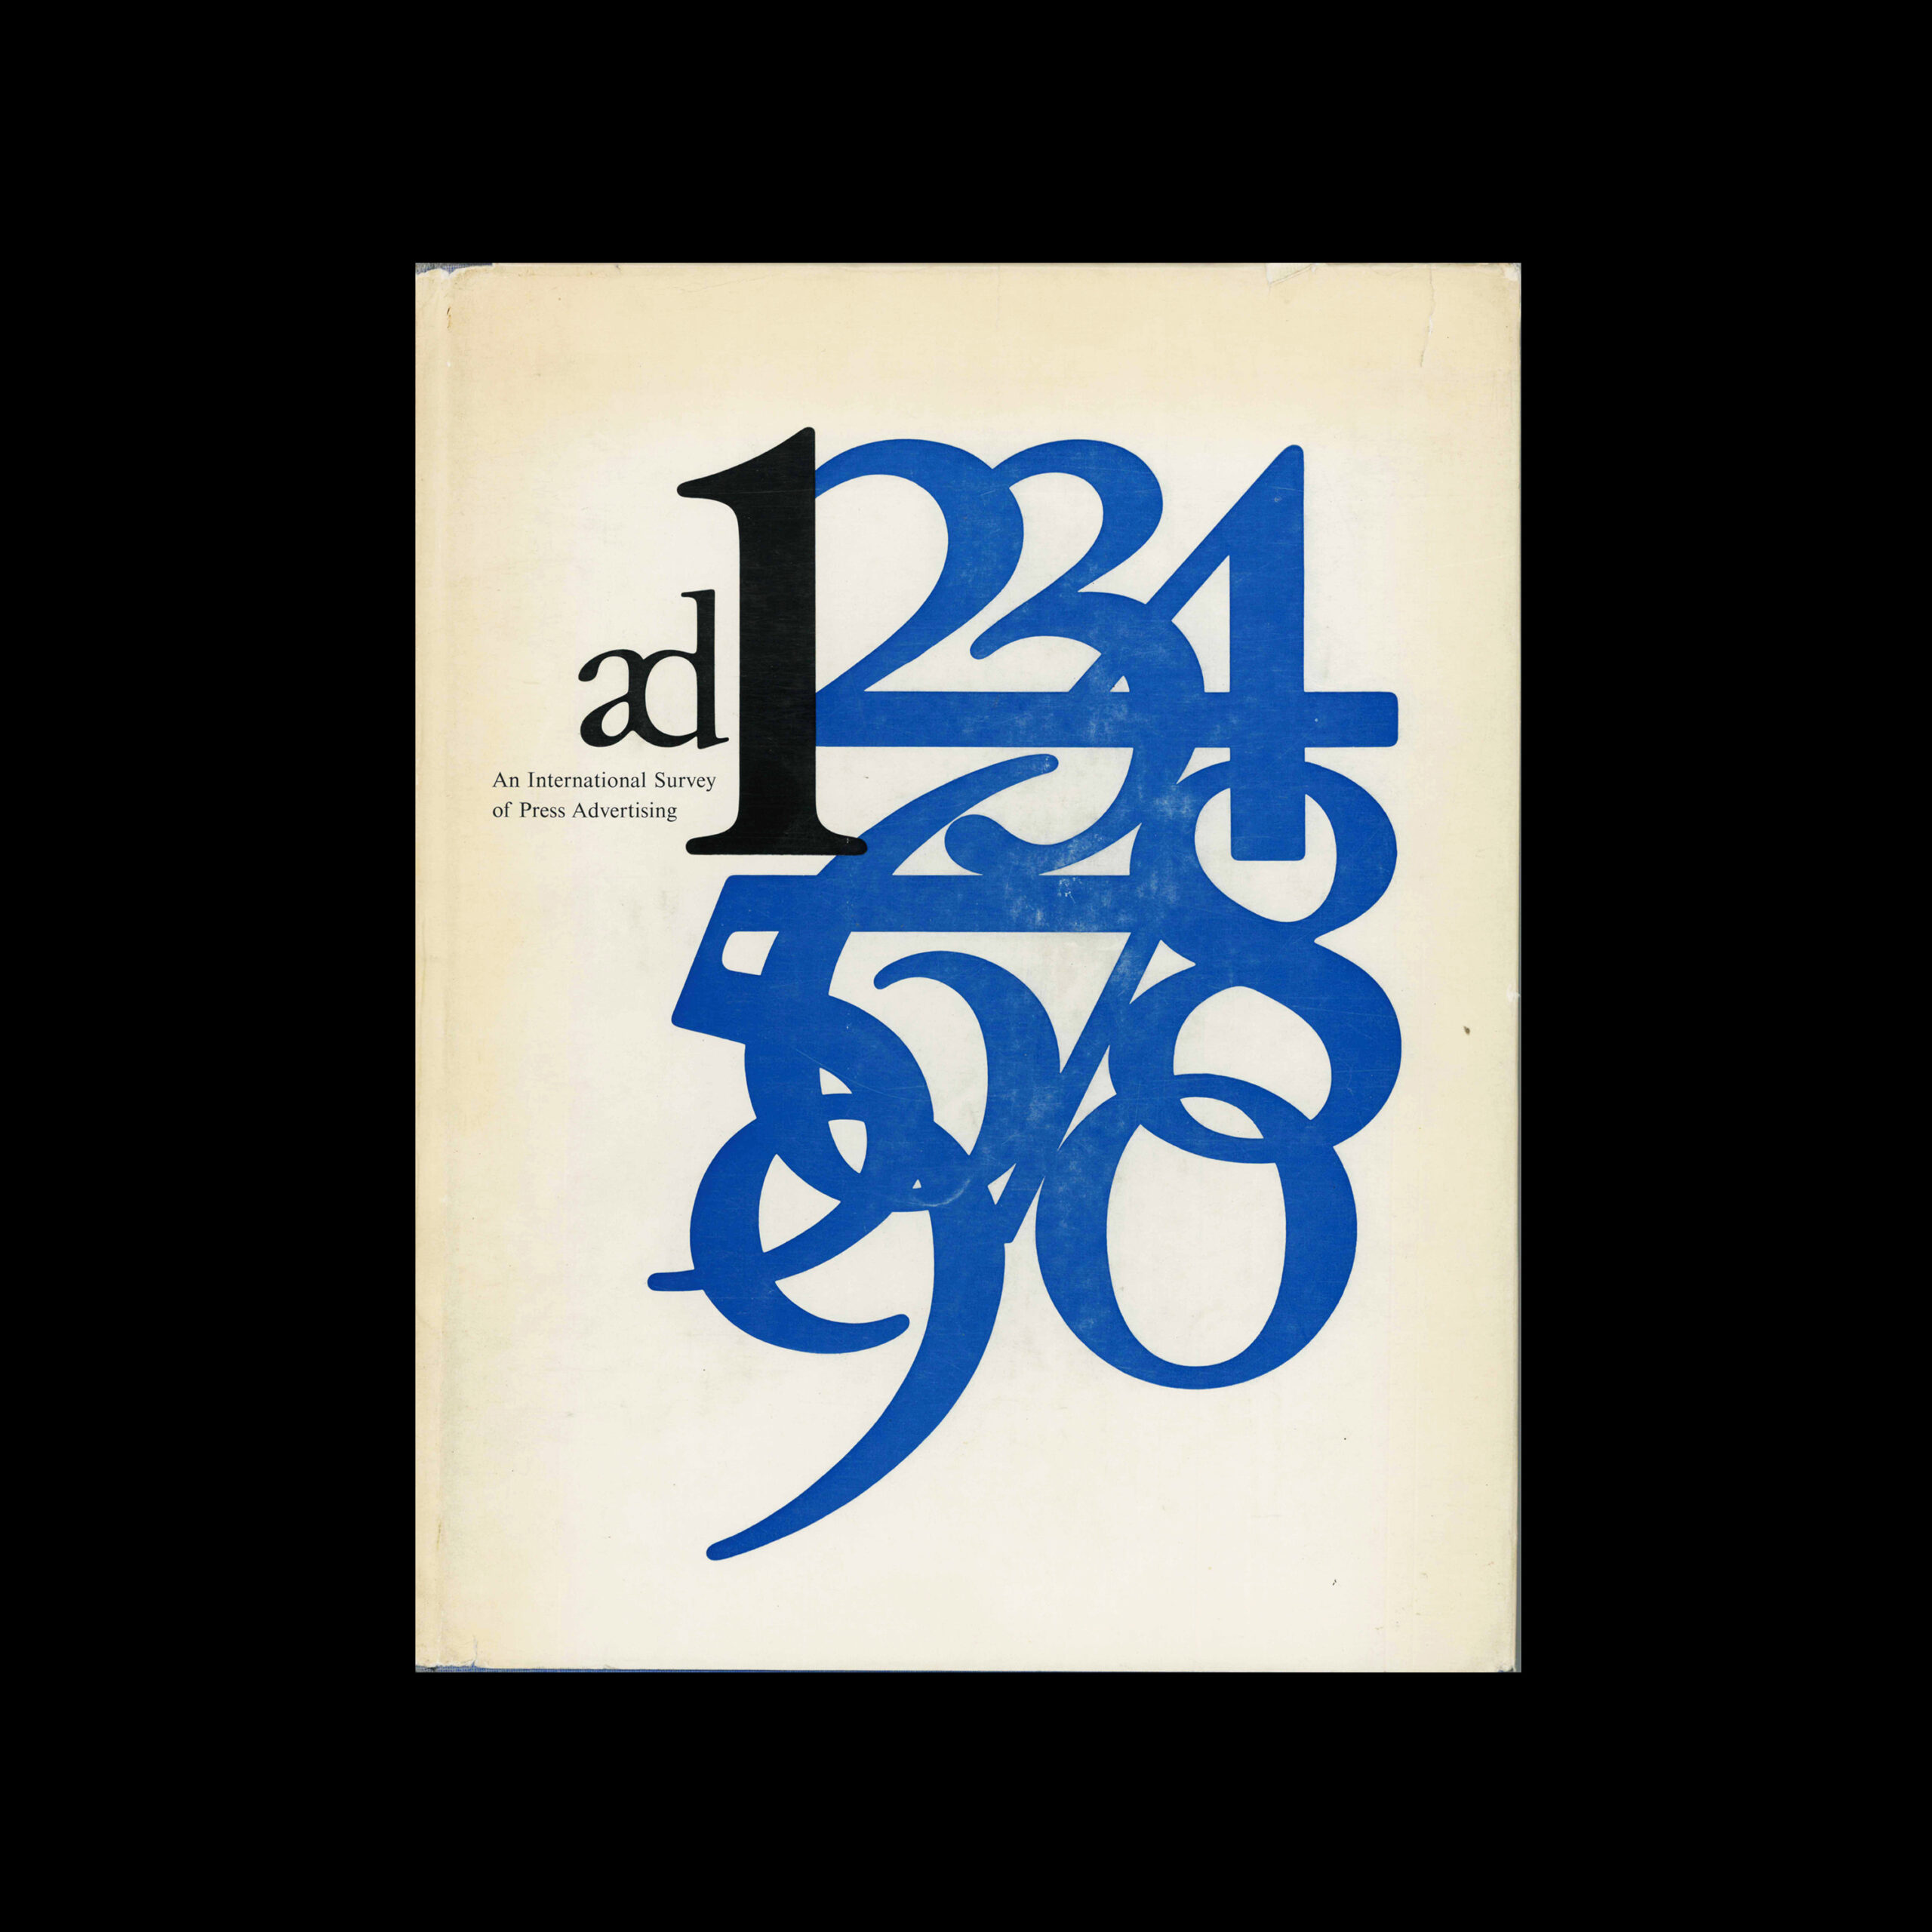 ad 1 - an international survey of Press Advertising, Thames & Hudson, 1966